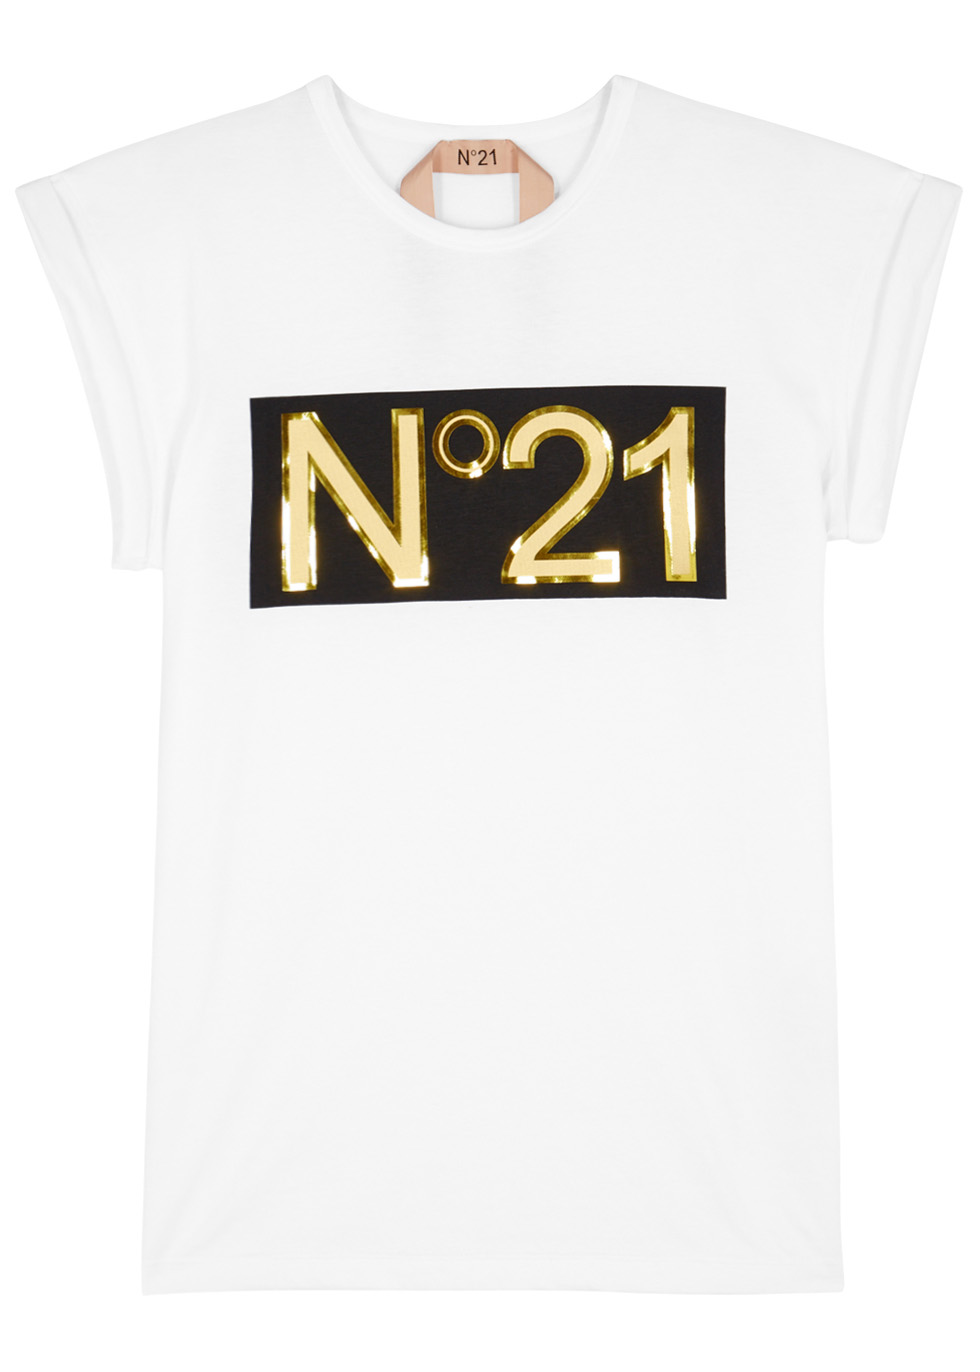 No.21 - Harvey Nichols